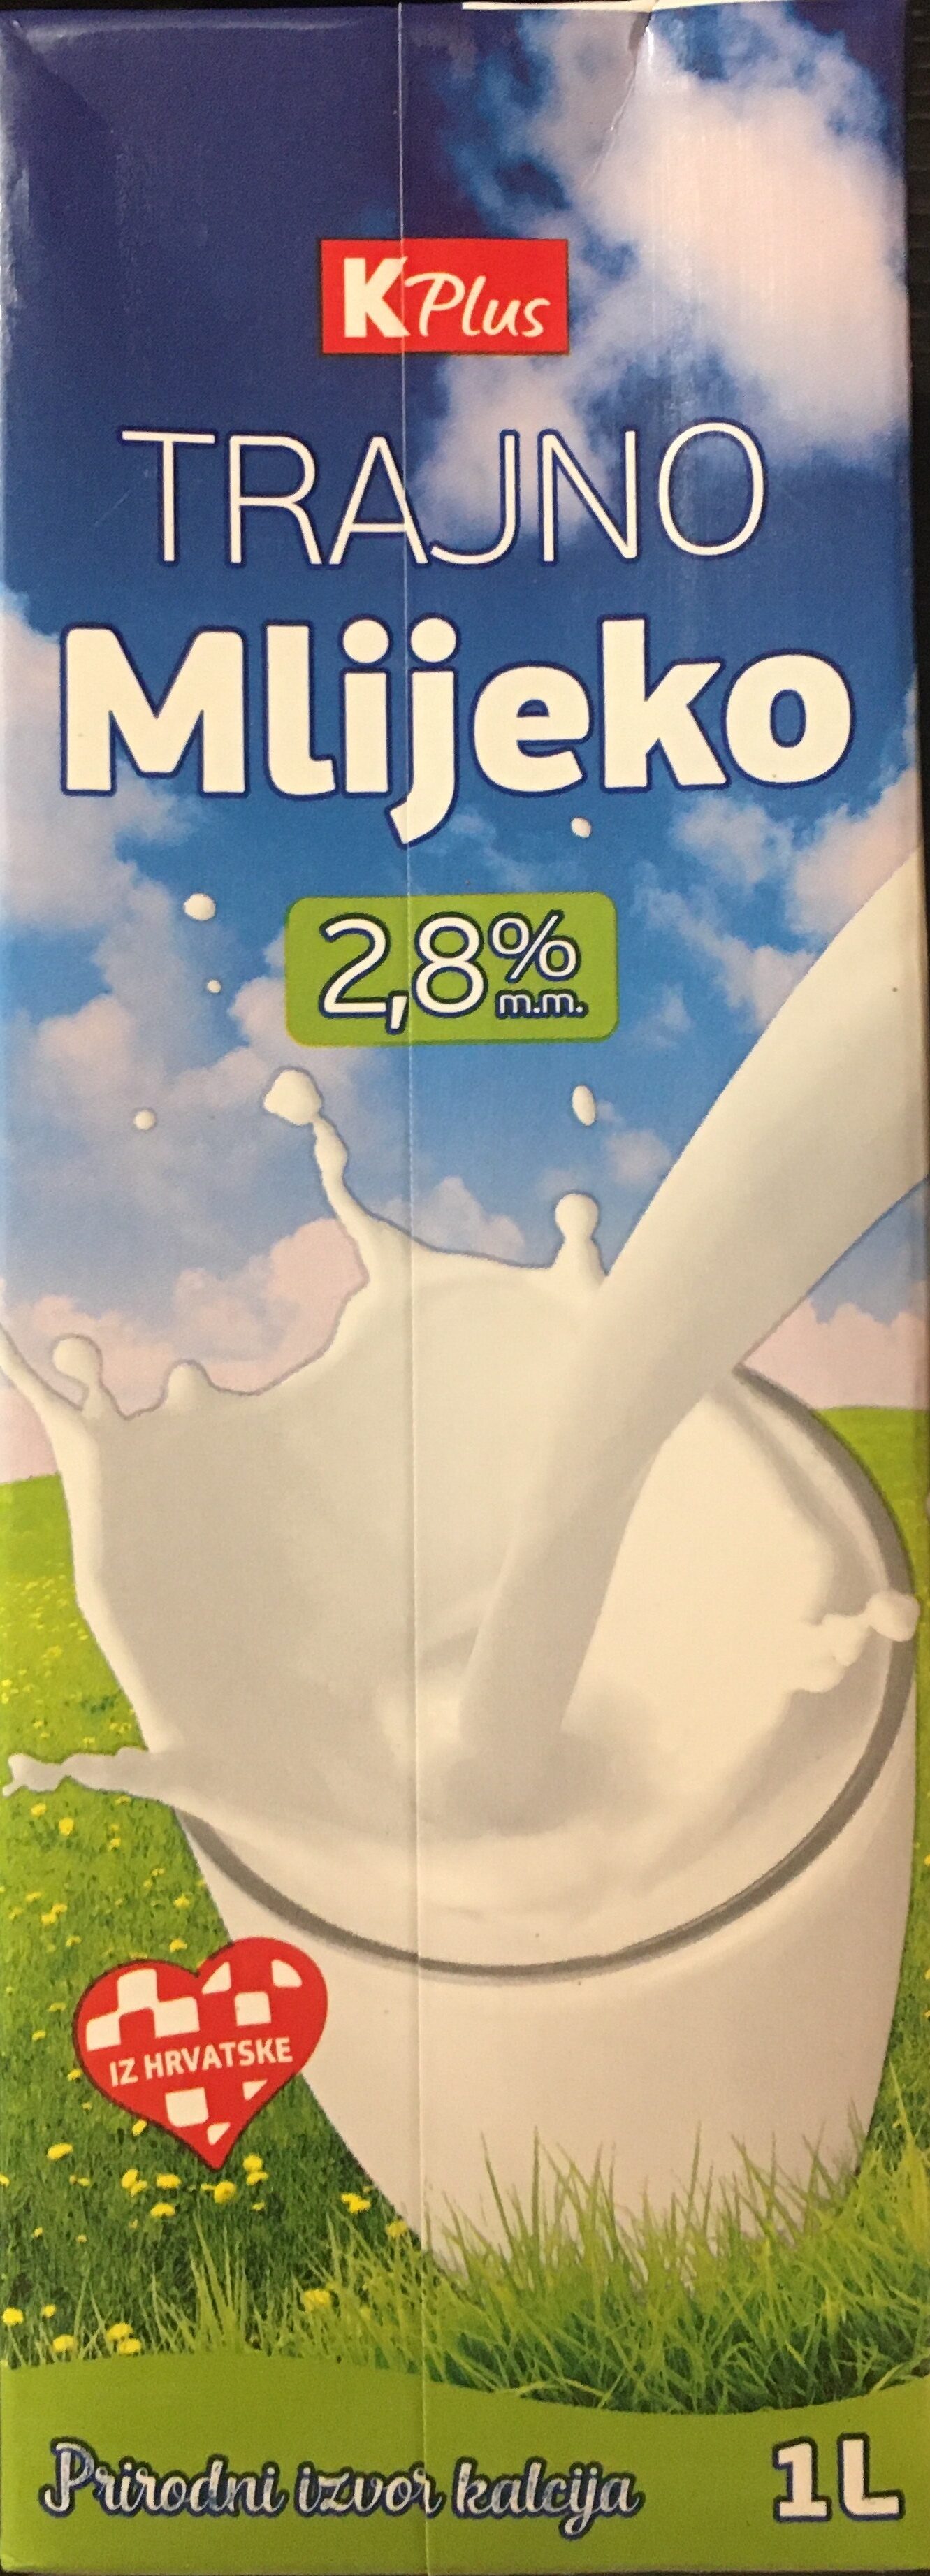 trajno mlijeko - Product - hr